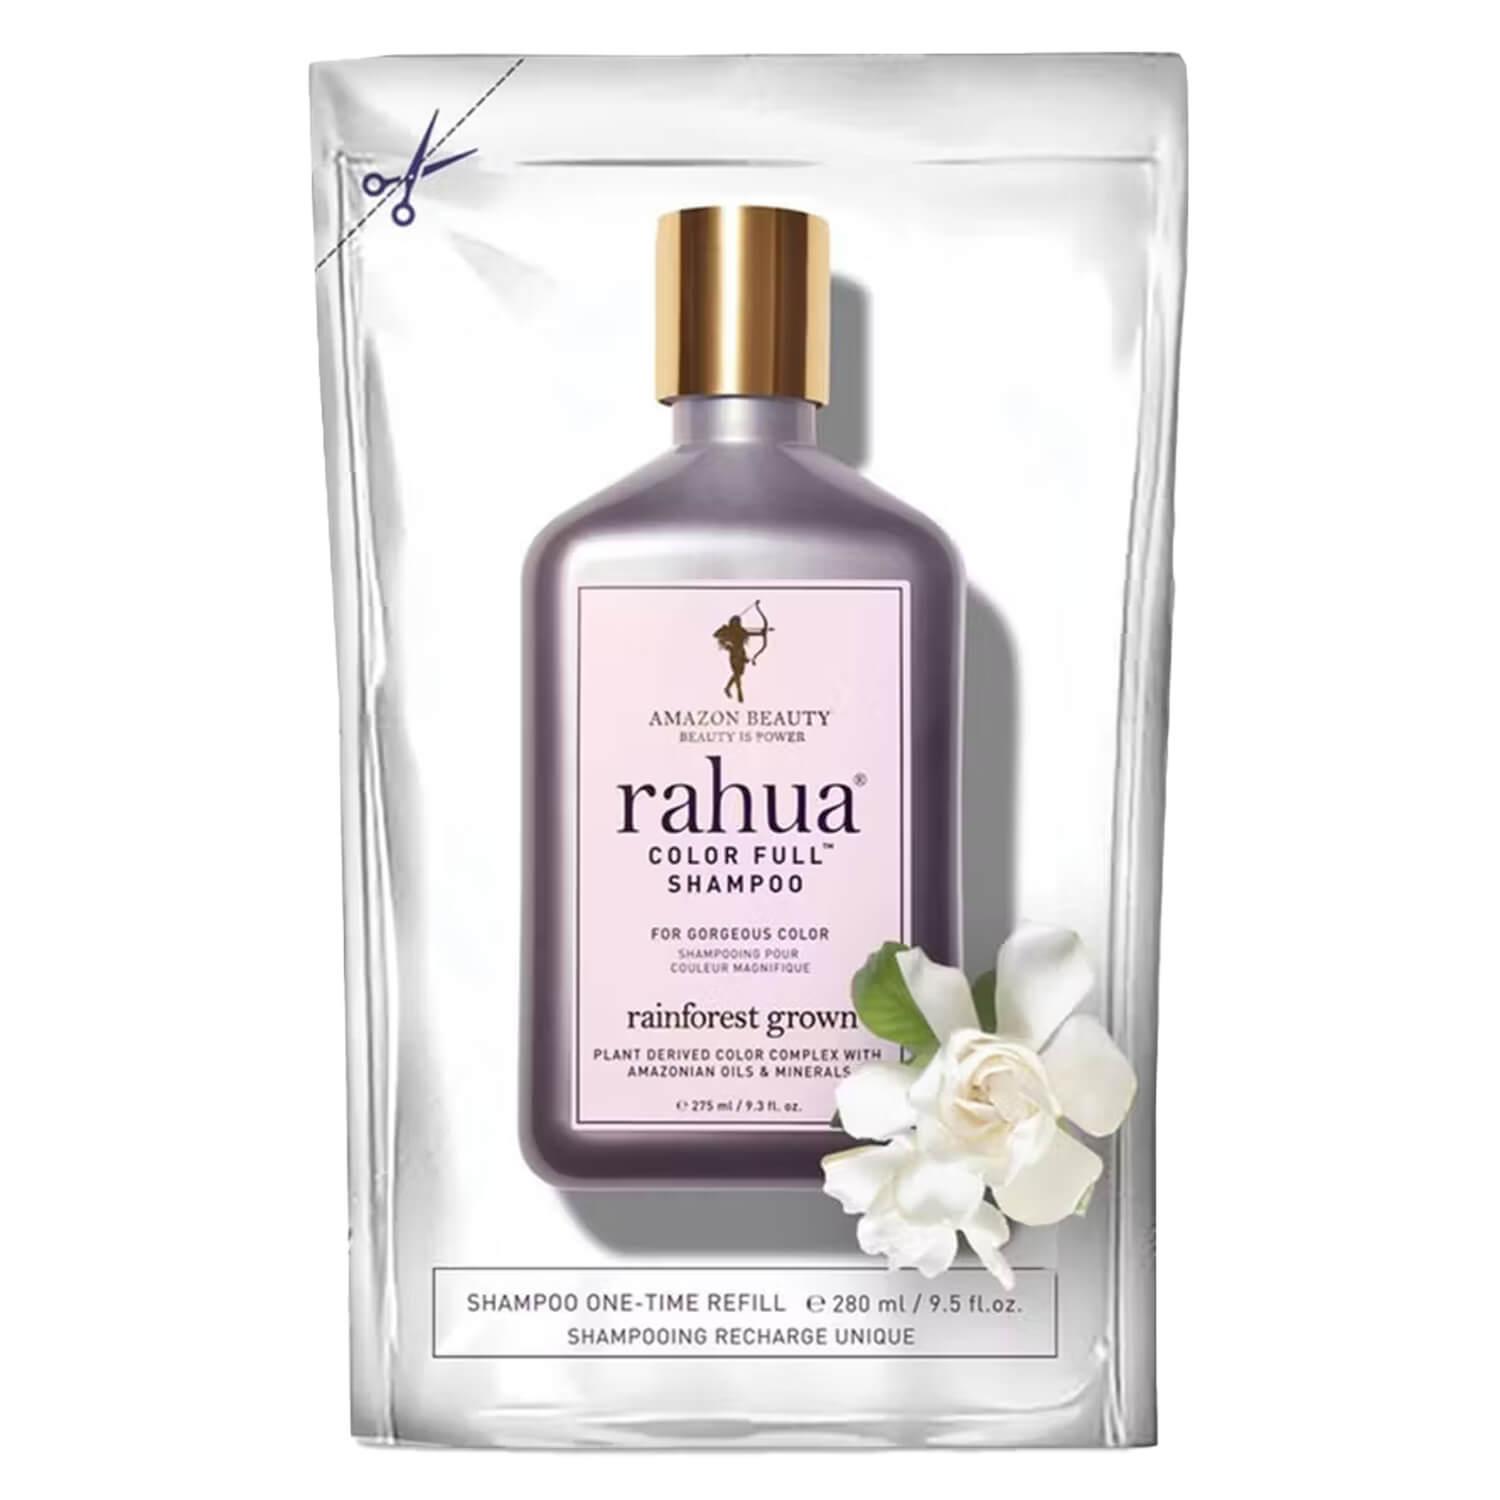 Rahua Daily Care - Color Full Shampoo Refill